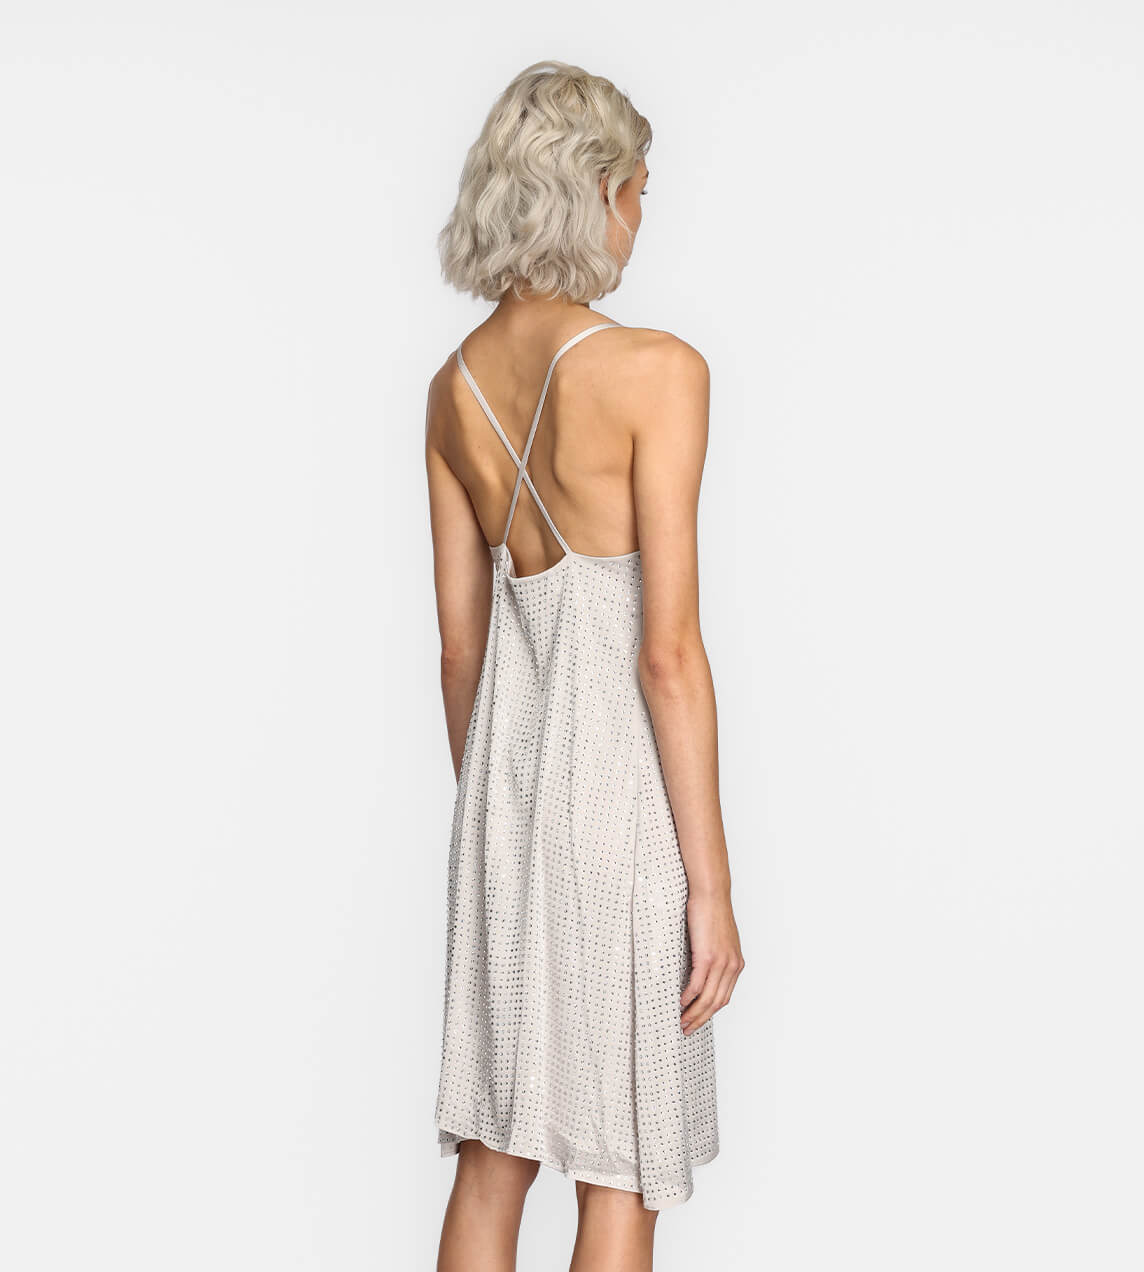 System - Sequin Slip Dress Pale Beige